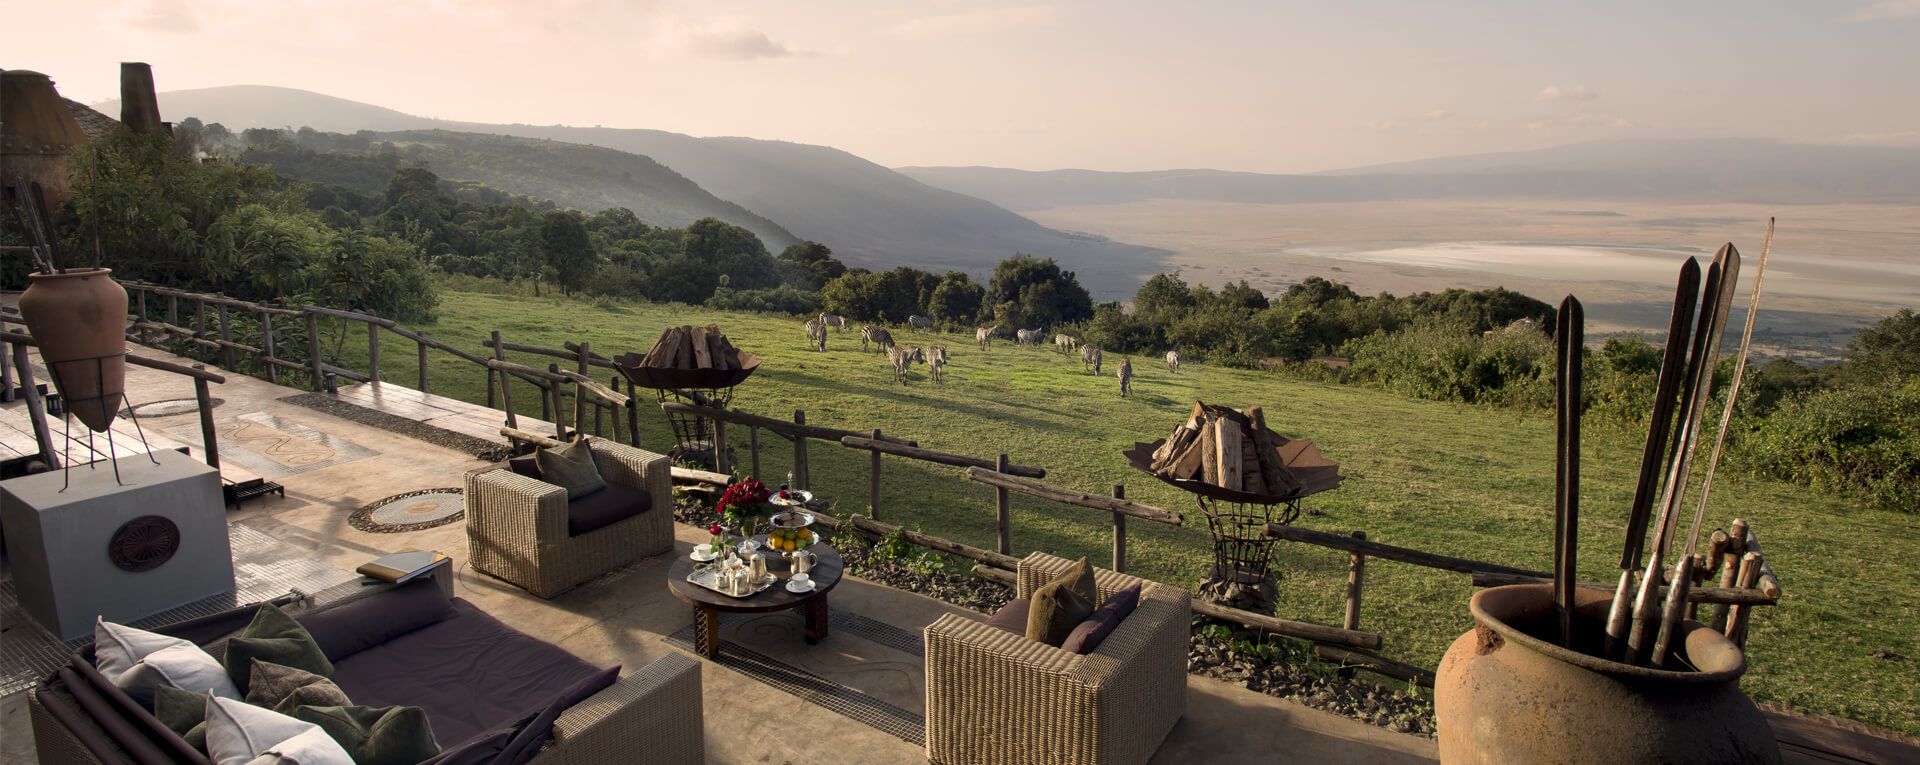 &Beyond Ngorongoro Crater Lodge